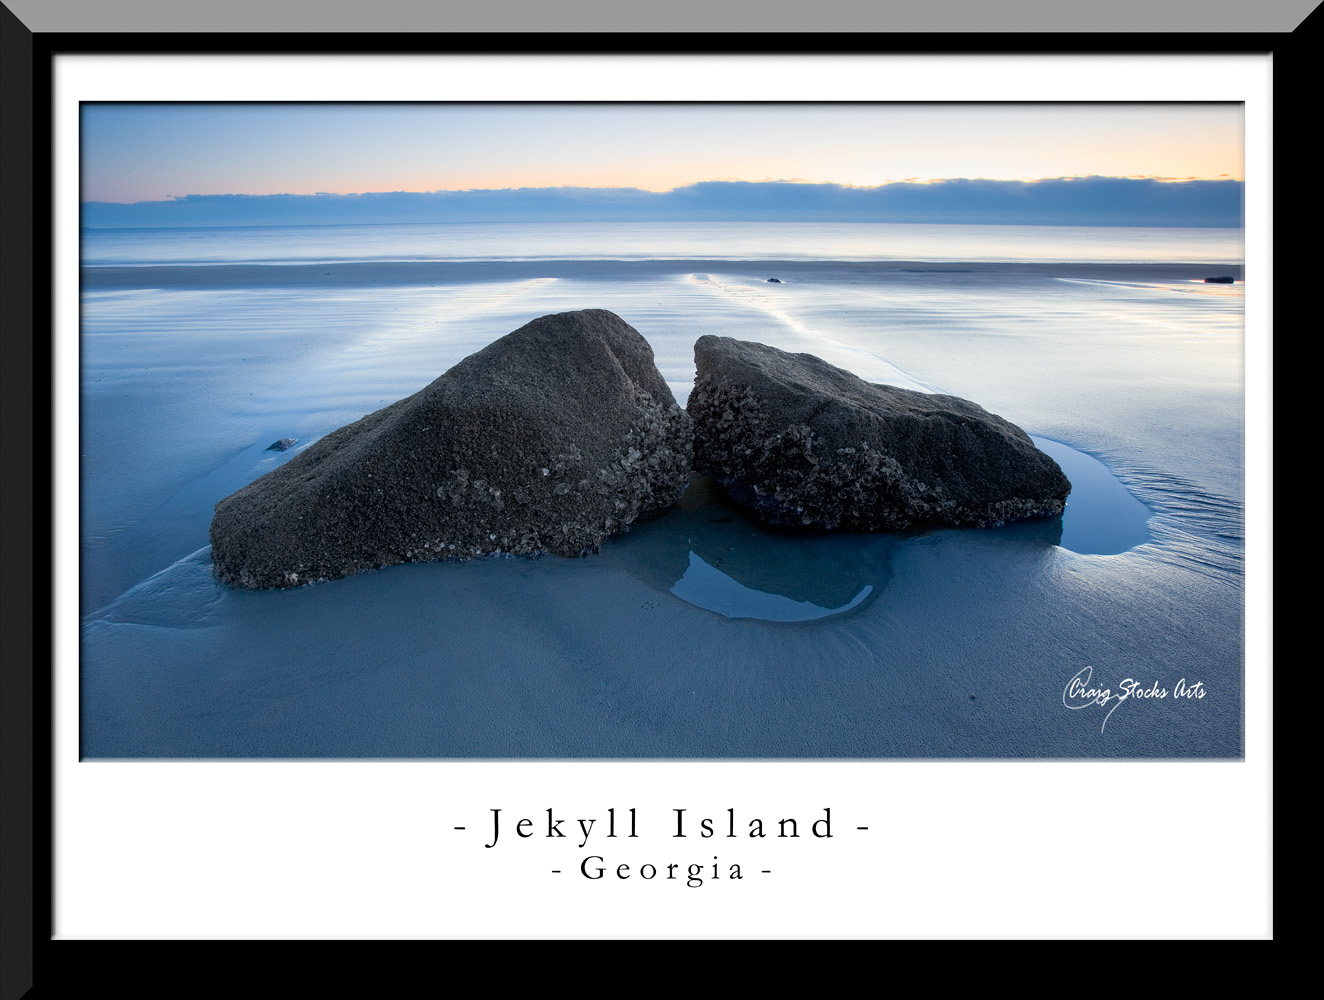 Jekyll Island